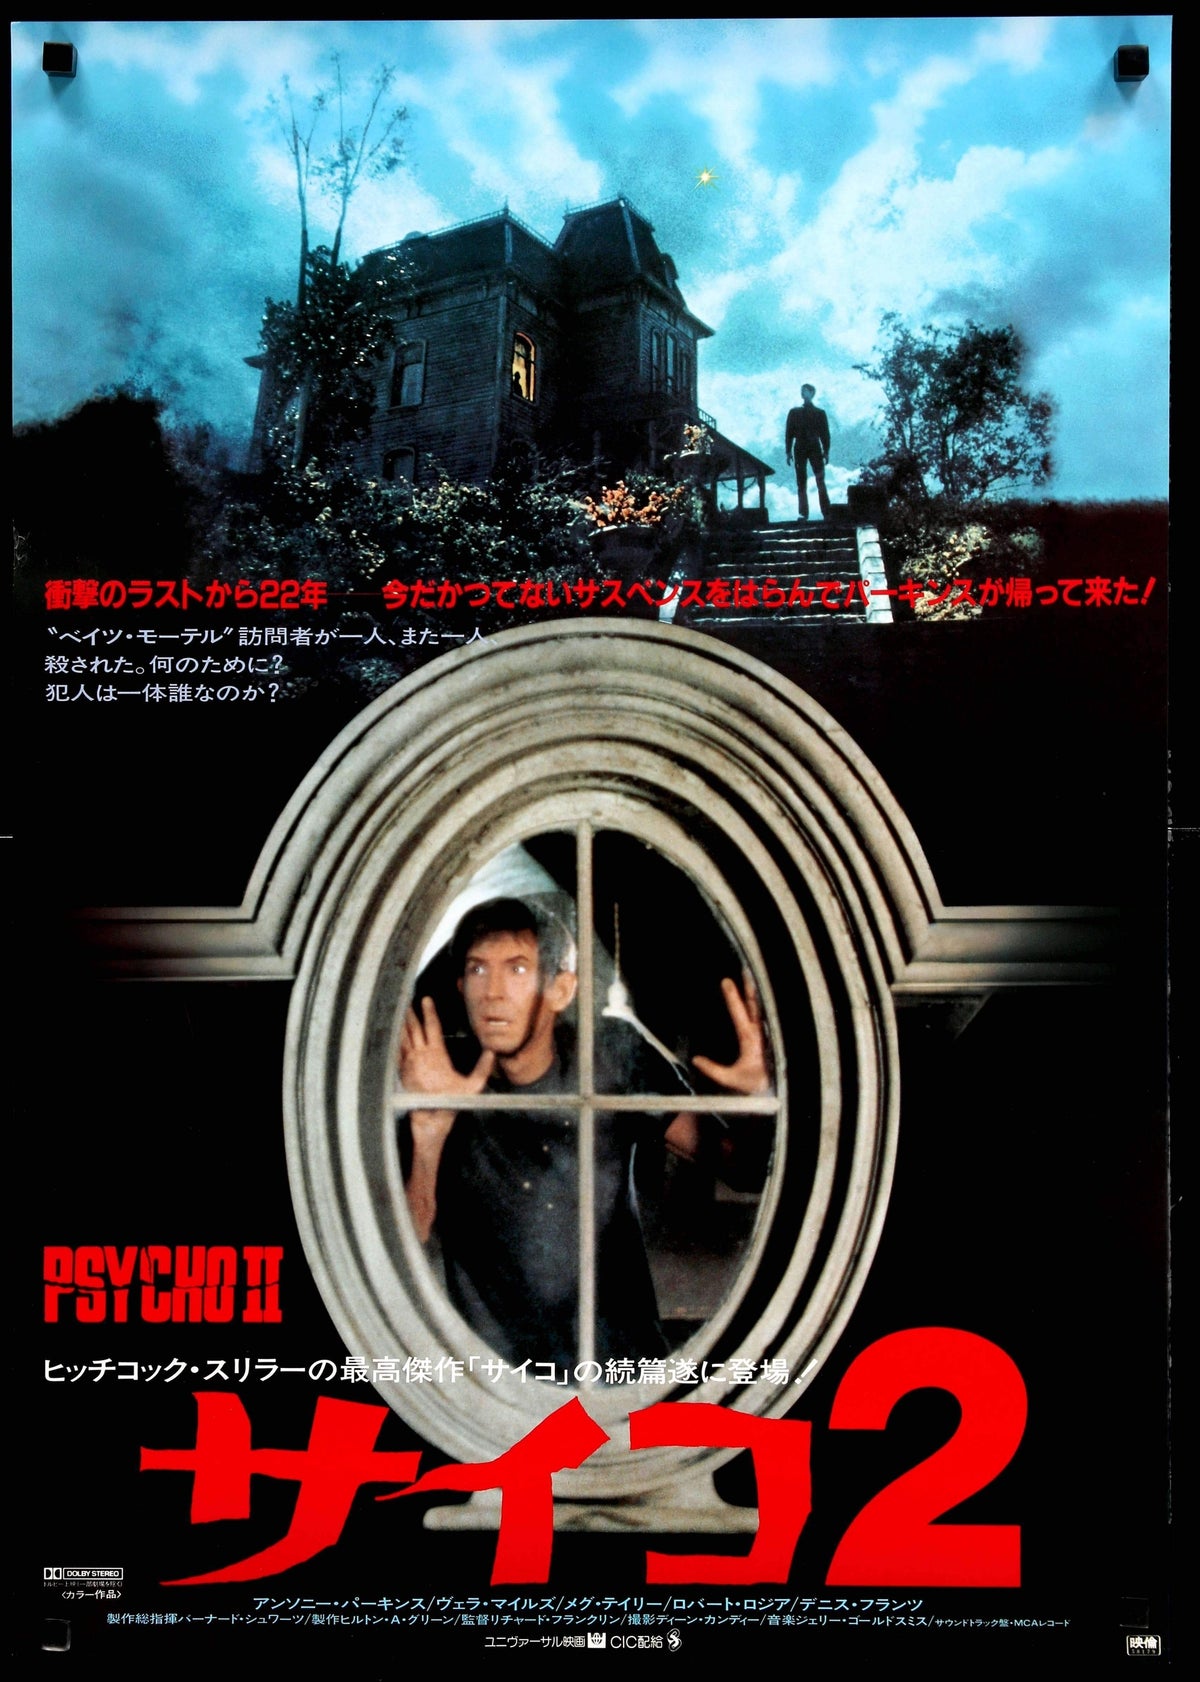 Psycho II (1983) original movie poster for sale at Original Film Art